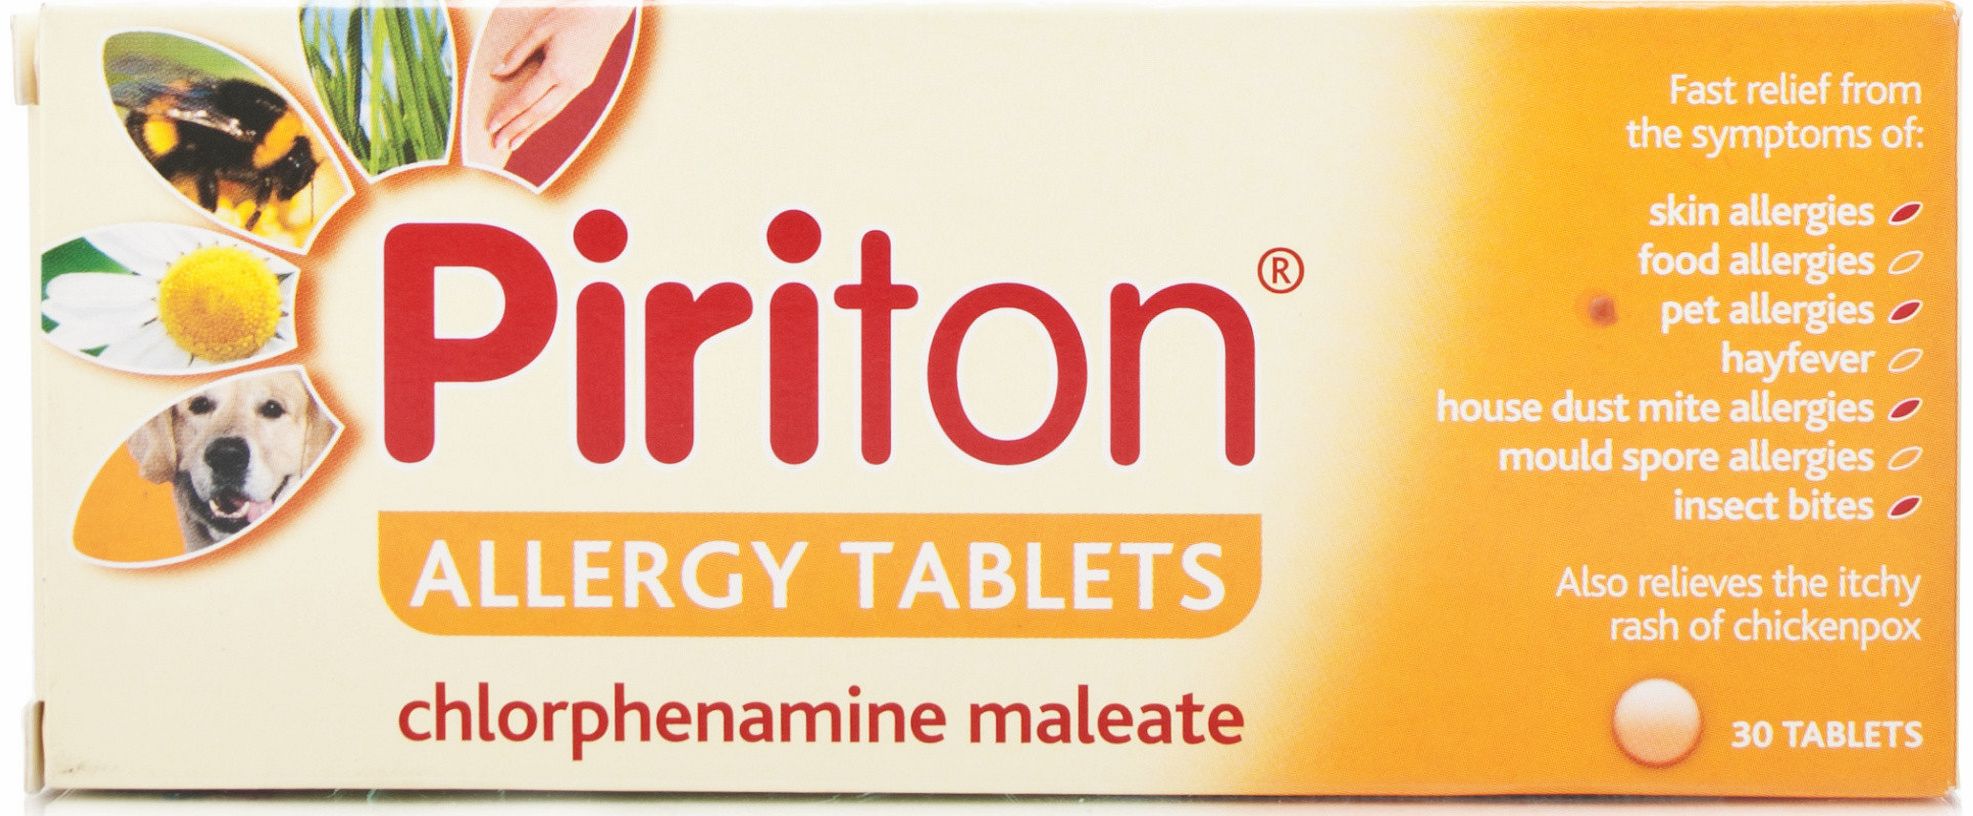 ton Allergy Tablets